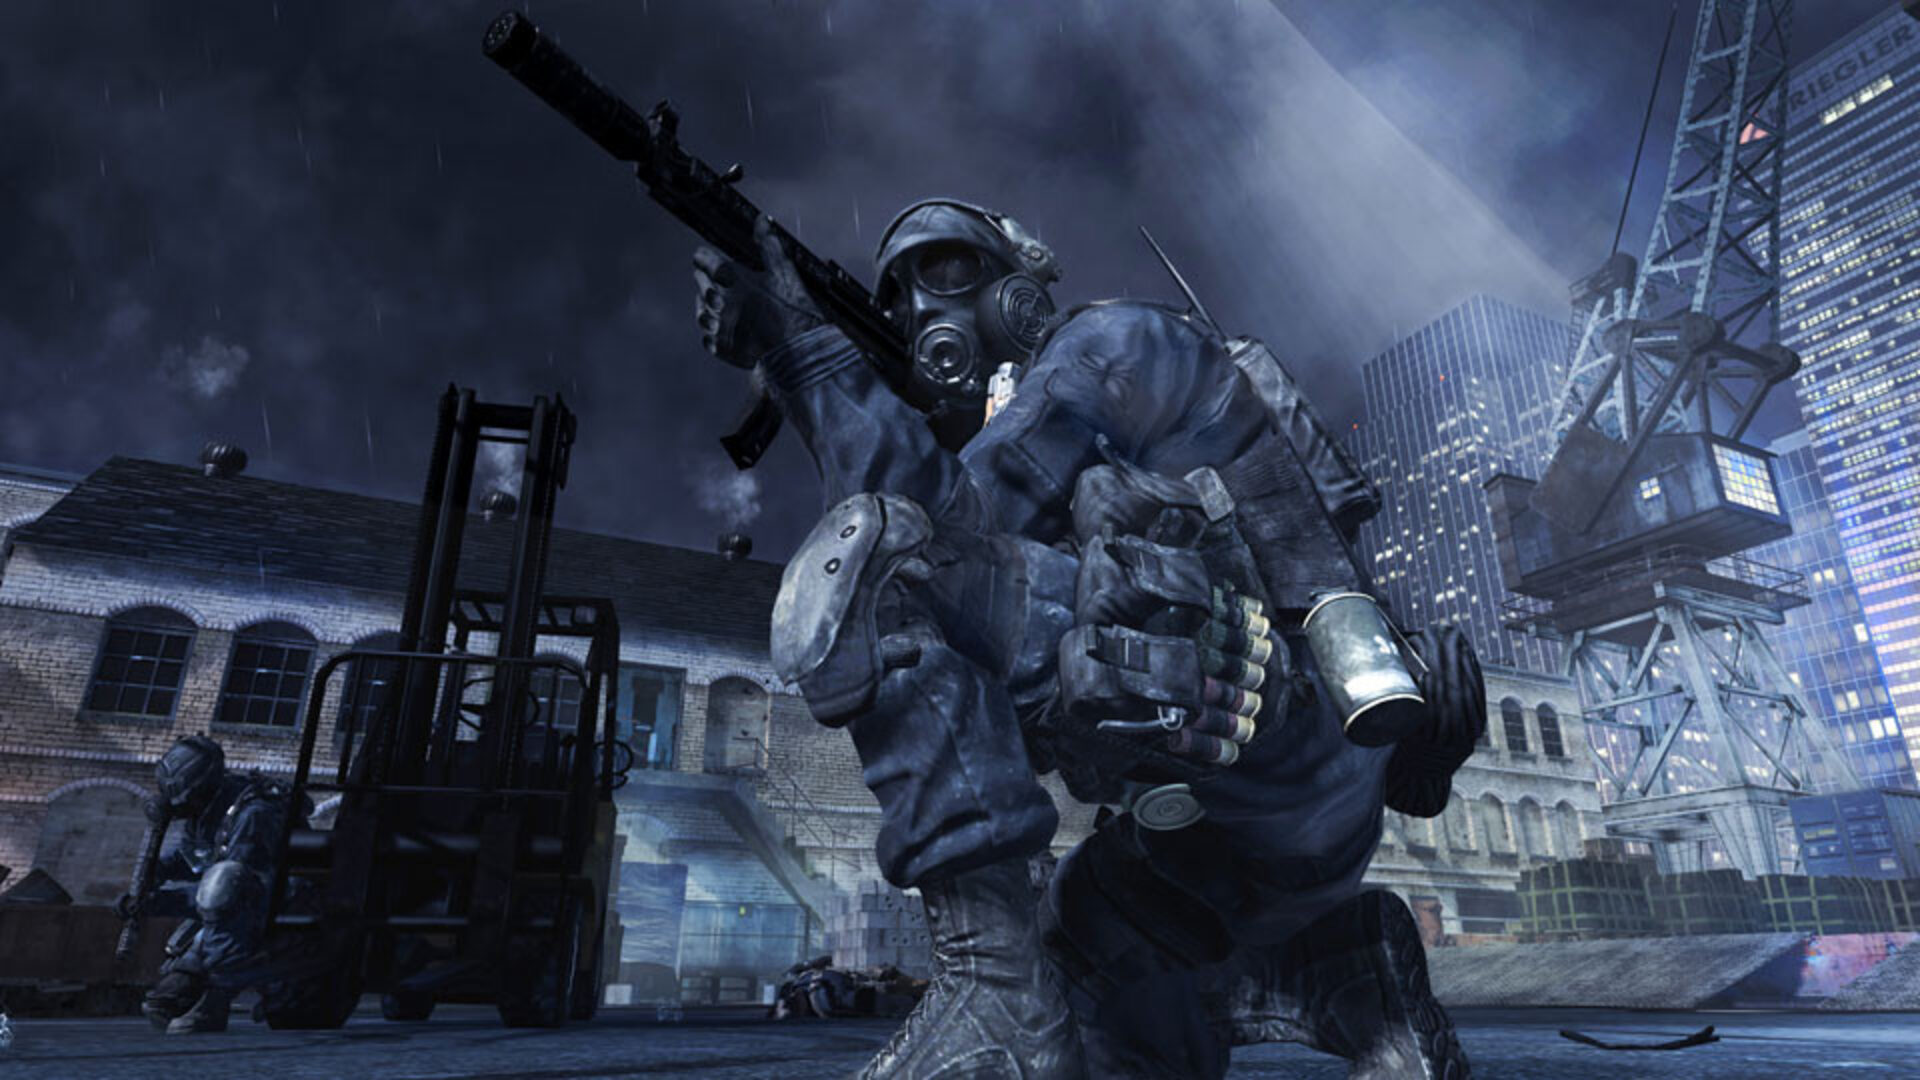 Call of Duty: Modern Warfare 3 Collection 2 DLC